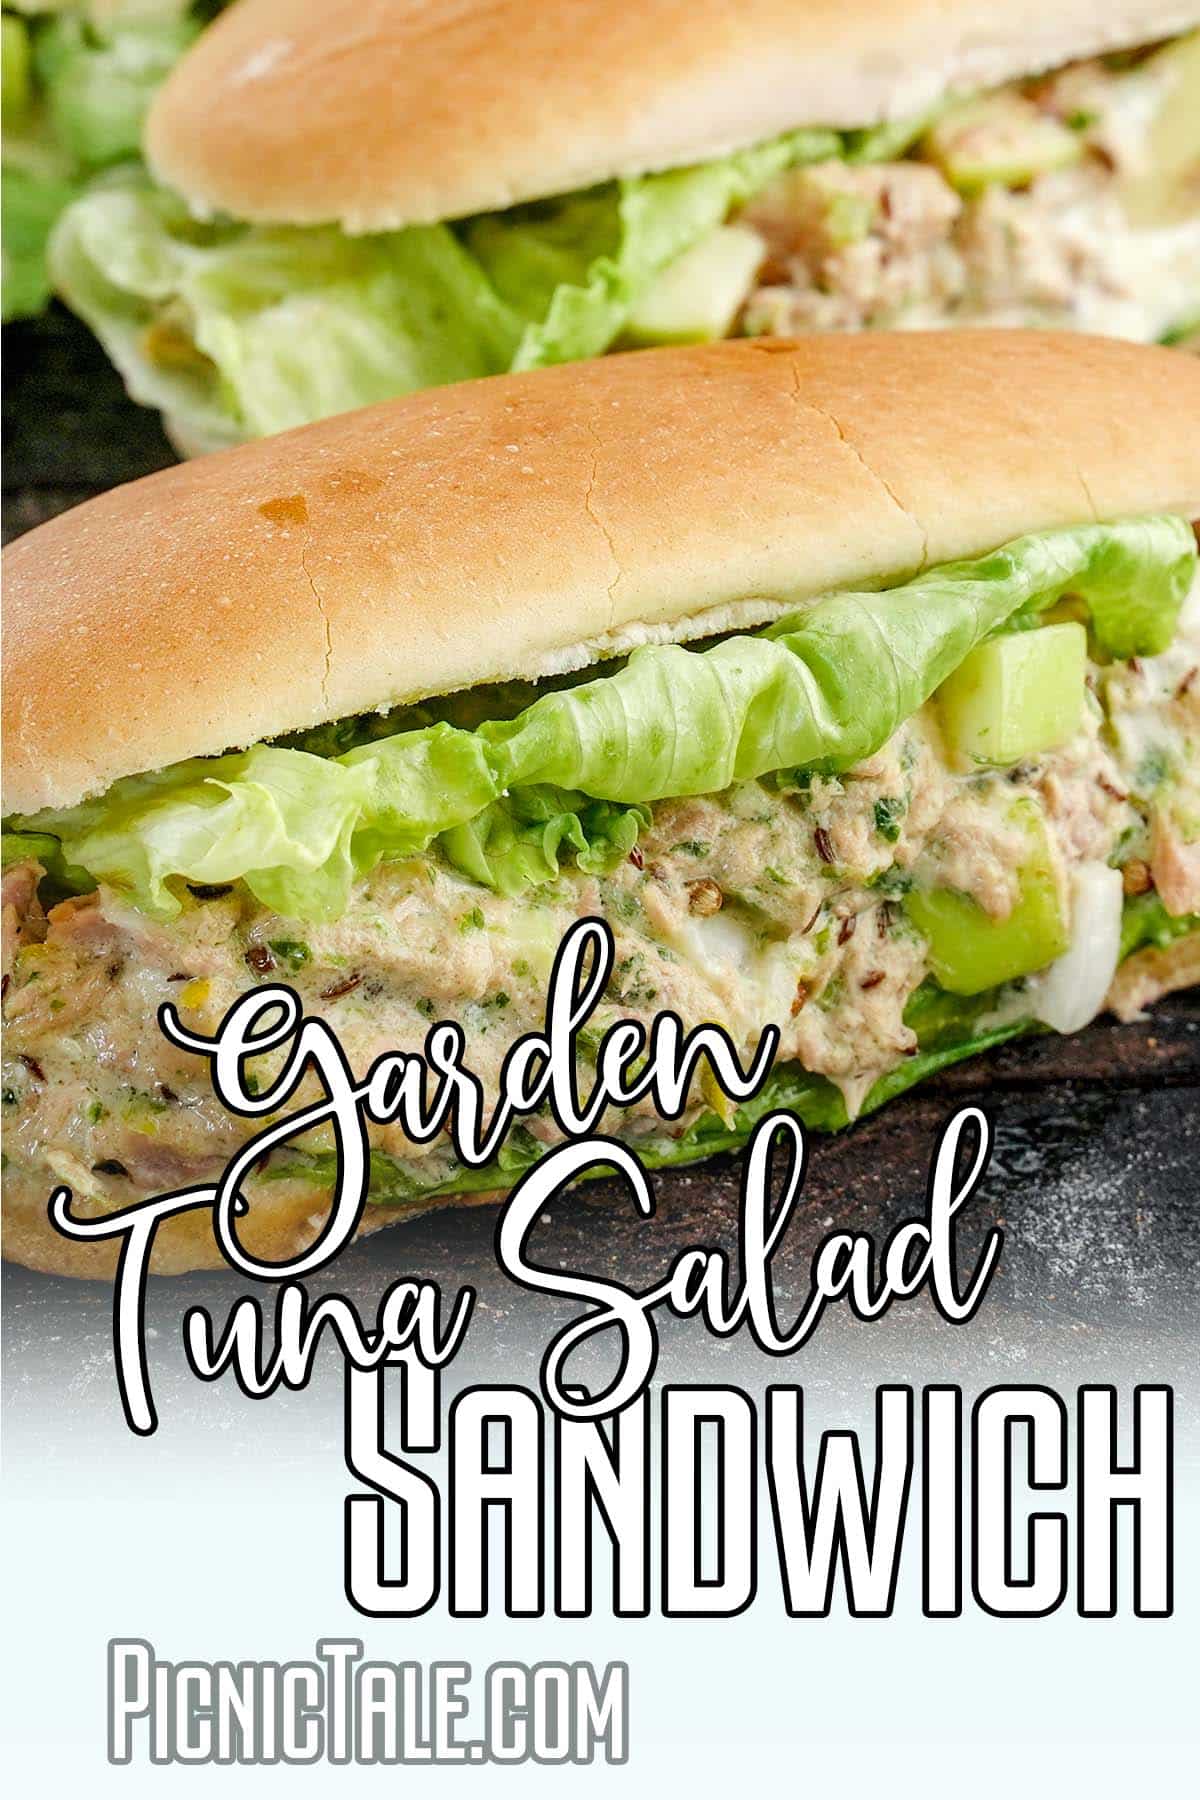 Garden tuna salad sandwich, wording on bottom.